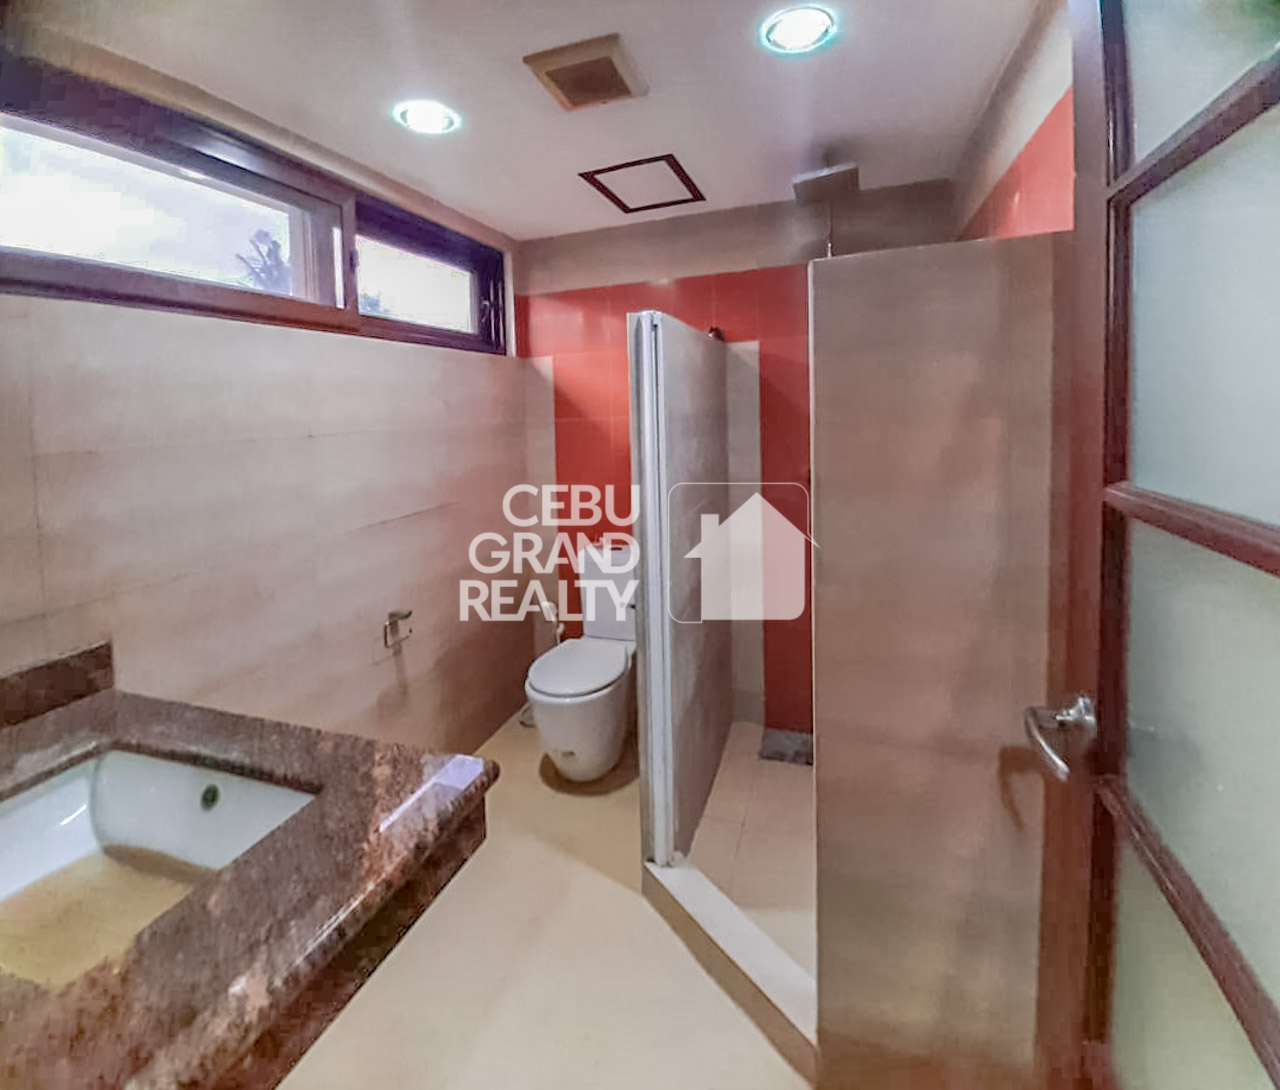 SRBAM3 6 Bedroom House for Sale in Amara Liloan - Cebu Grand Realty (11)